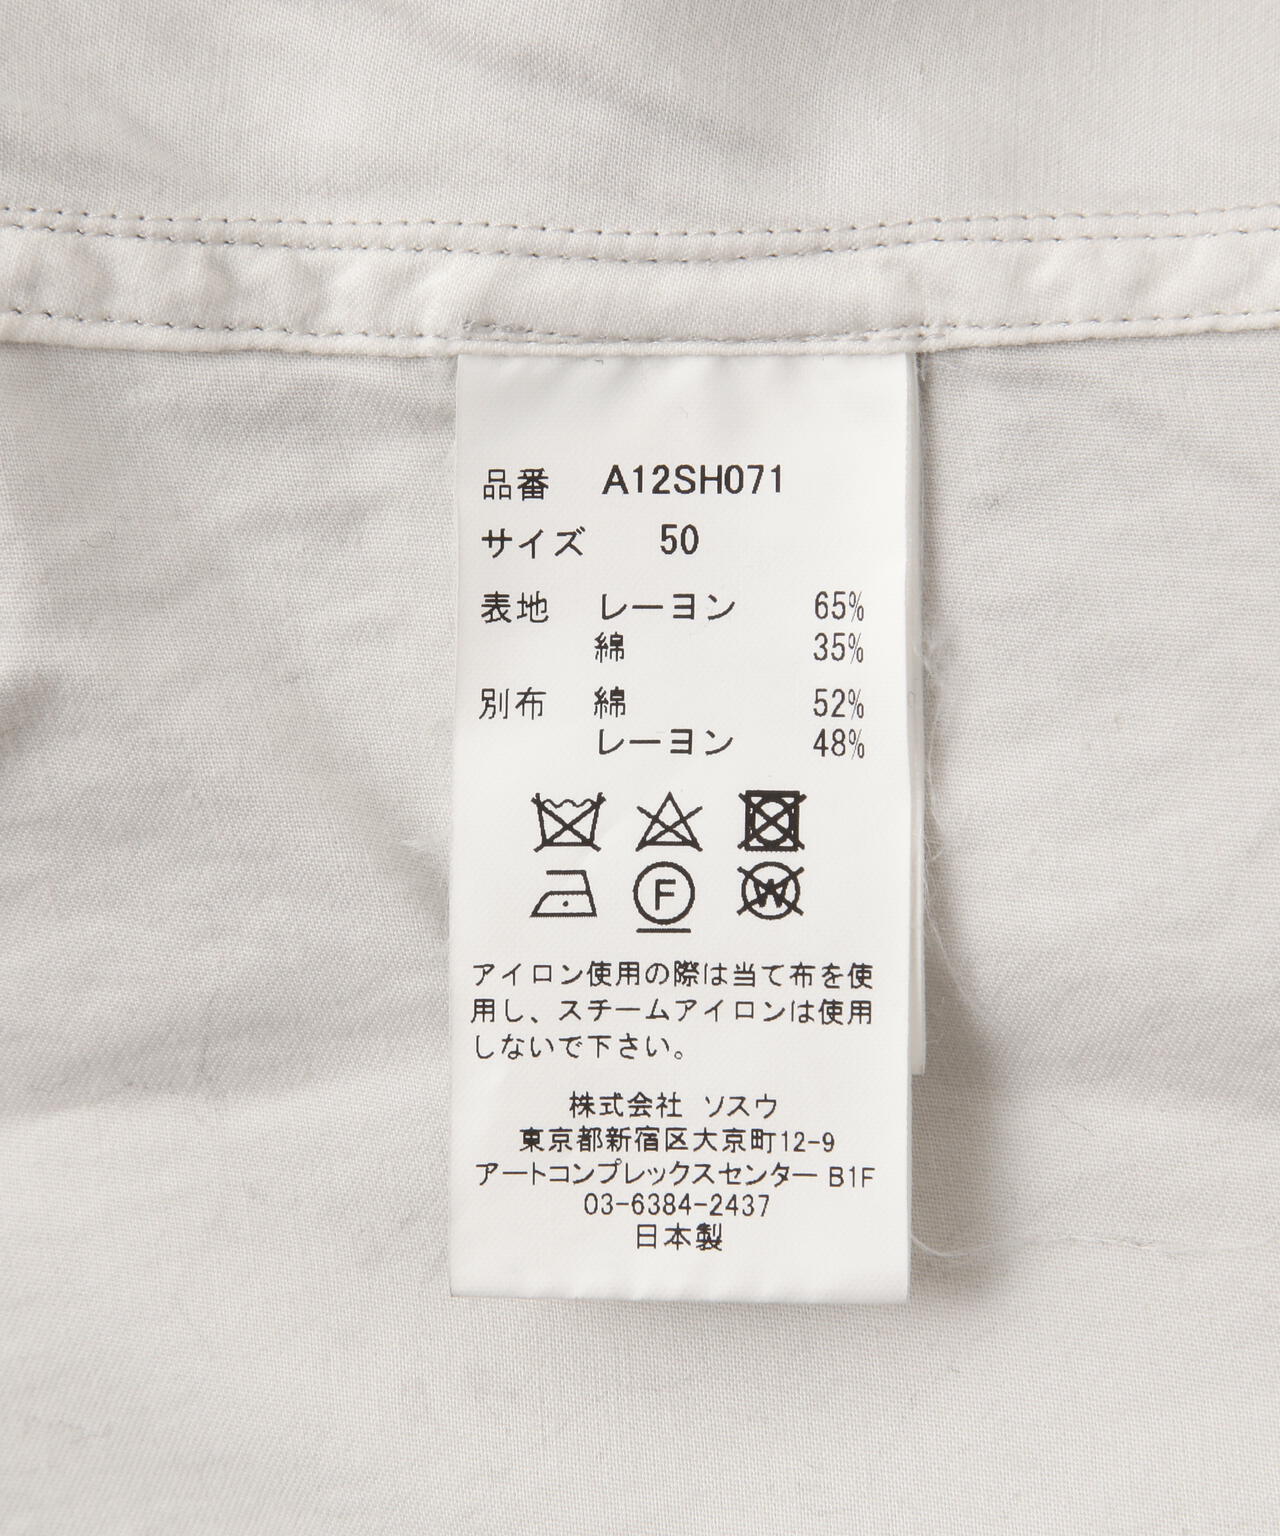 Maison MIHARAYASUHIRO/Double Layered Shirt